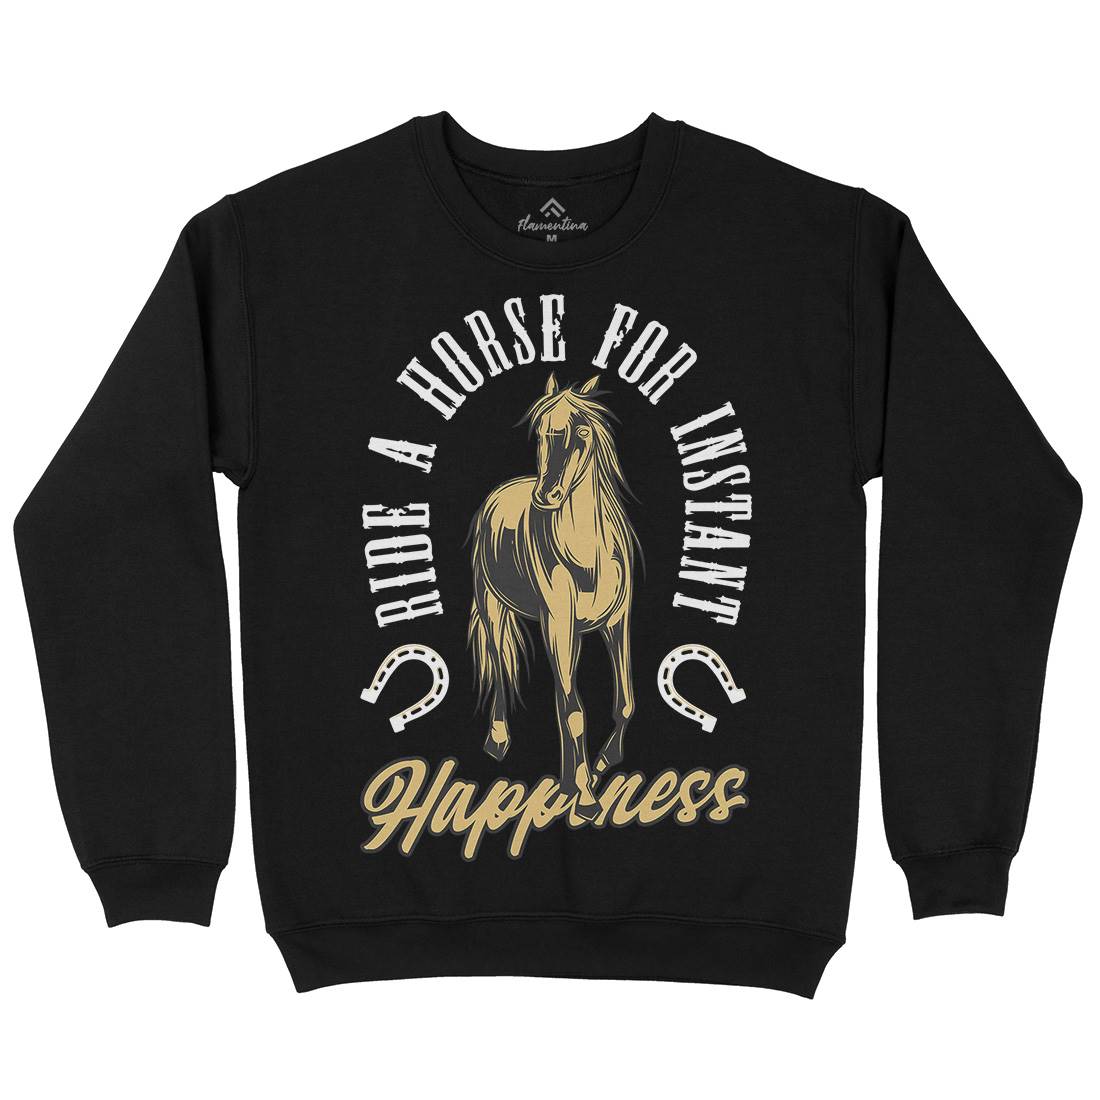 Happiness Kids Crew Neck Sweatshirt Animals C856